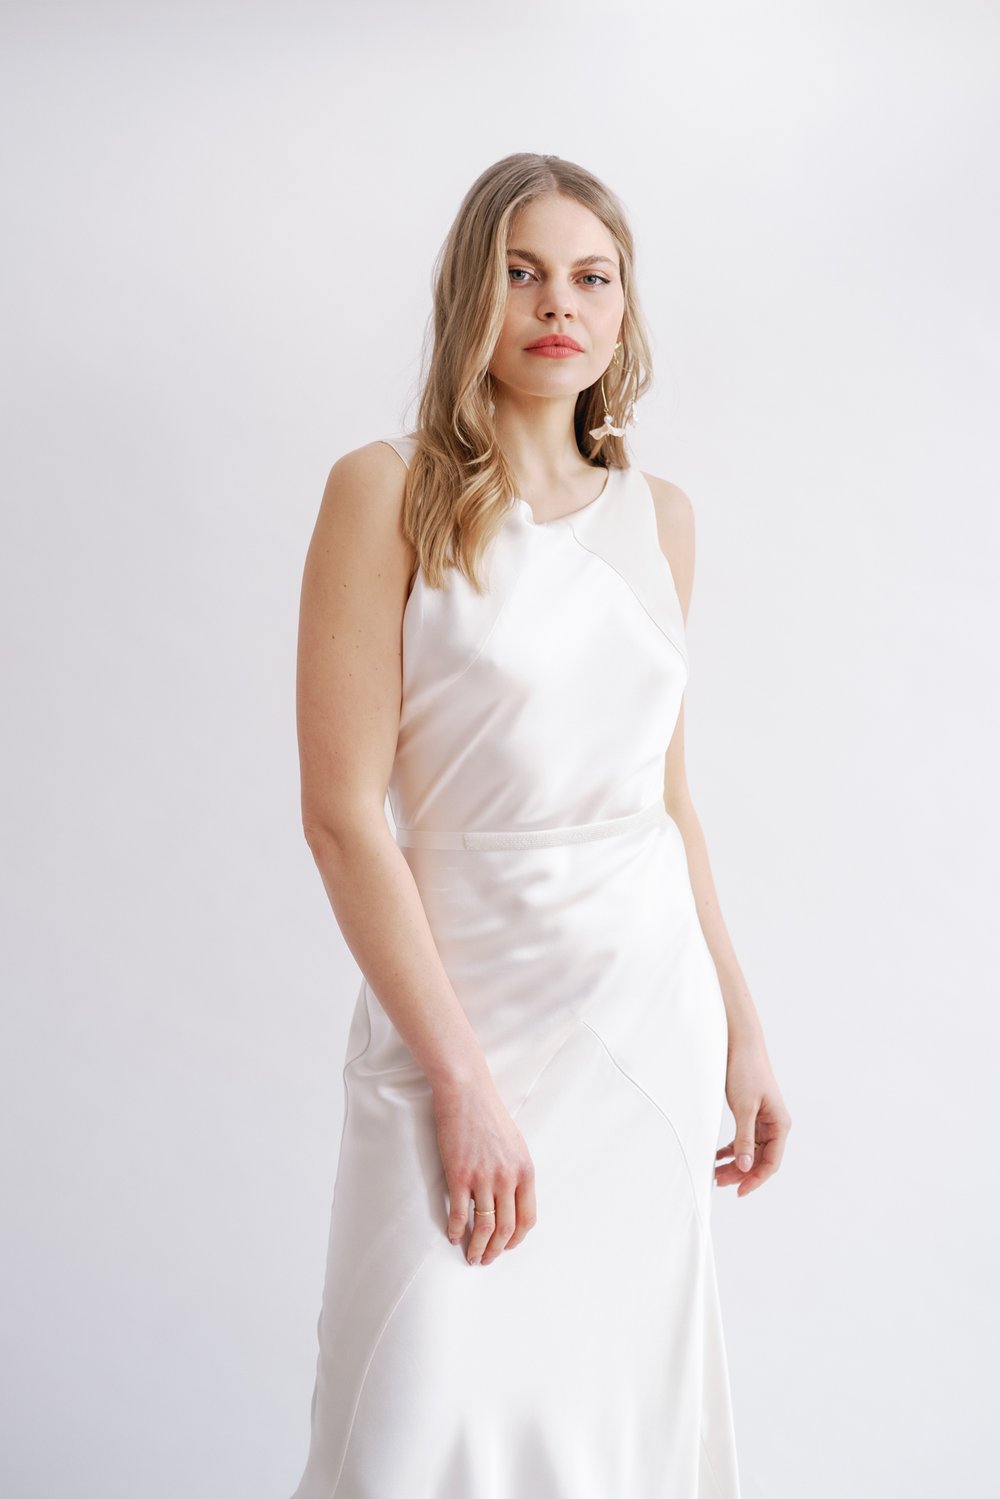 Gladioli silk wedding gown Kate Beaumont Sheffield 2.jpg